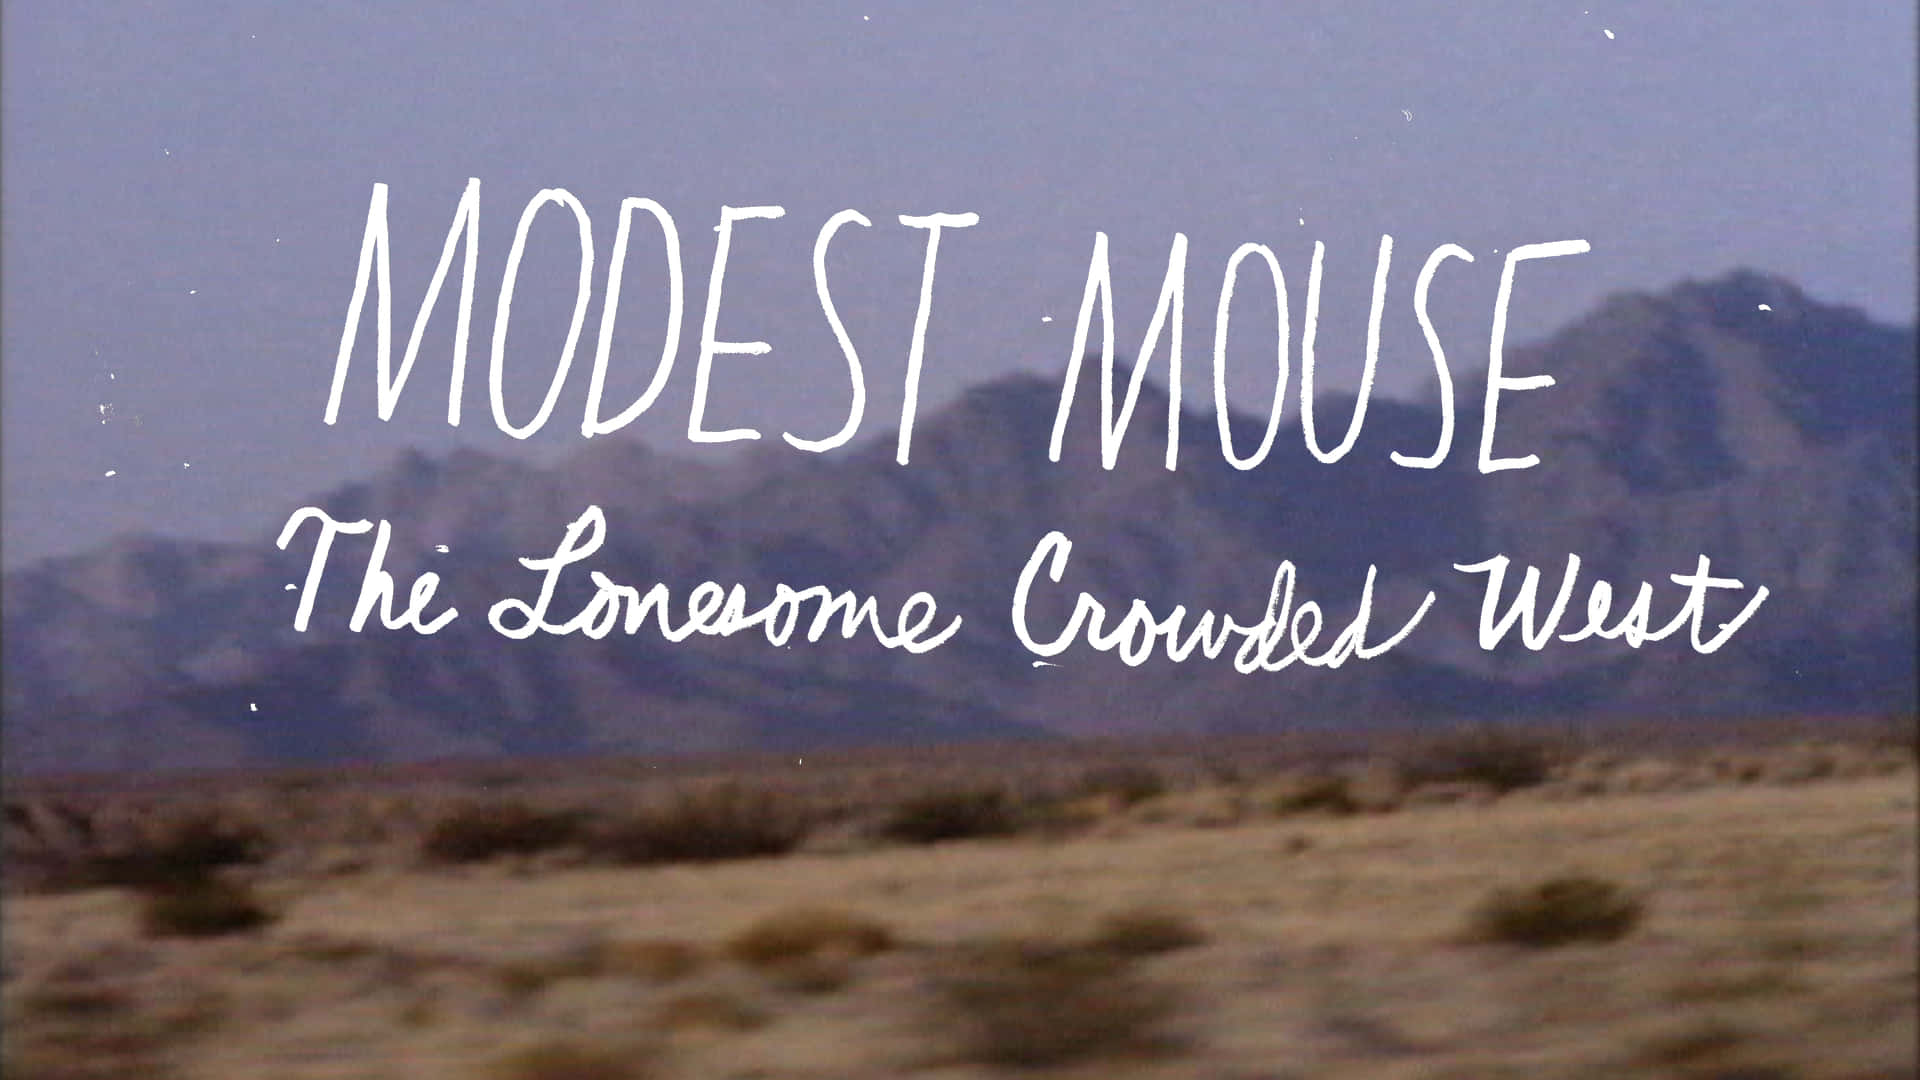 Faro'luce Sull'album Dei Modest Mouse - The Lonesome Crowded West Sfondo